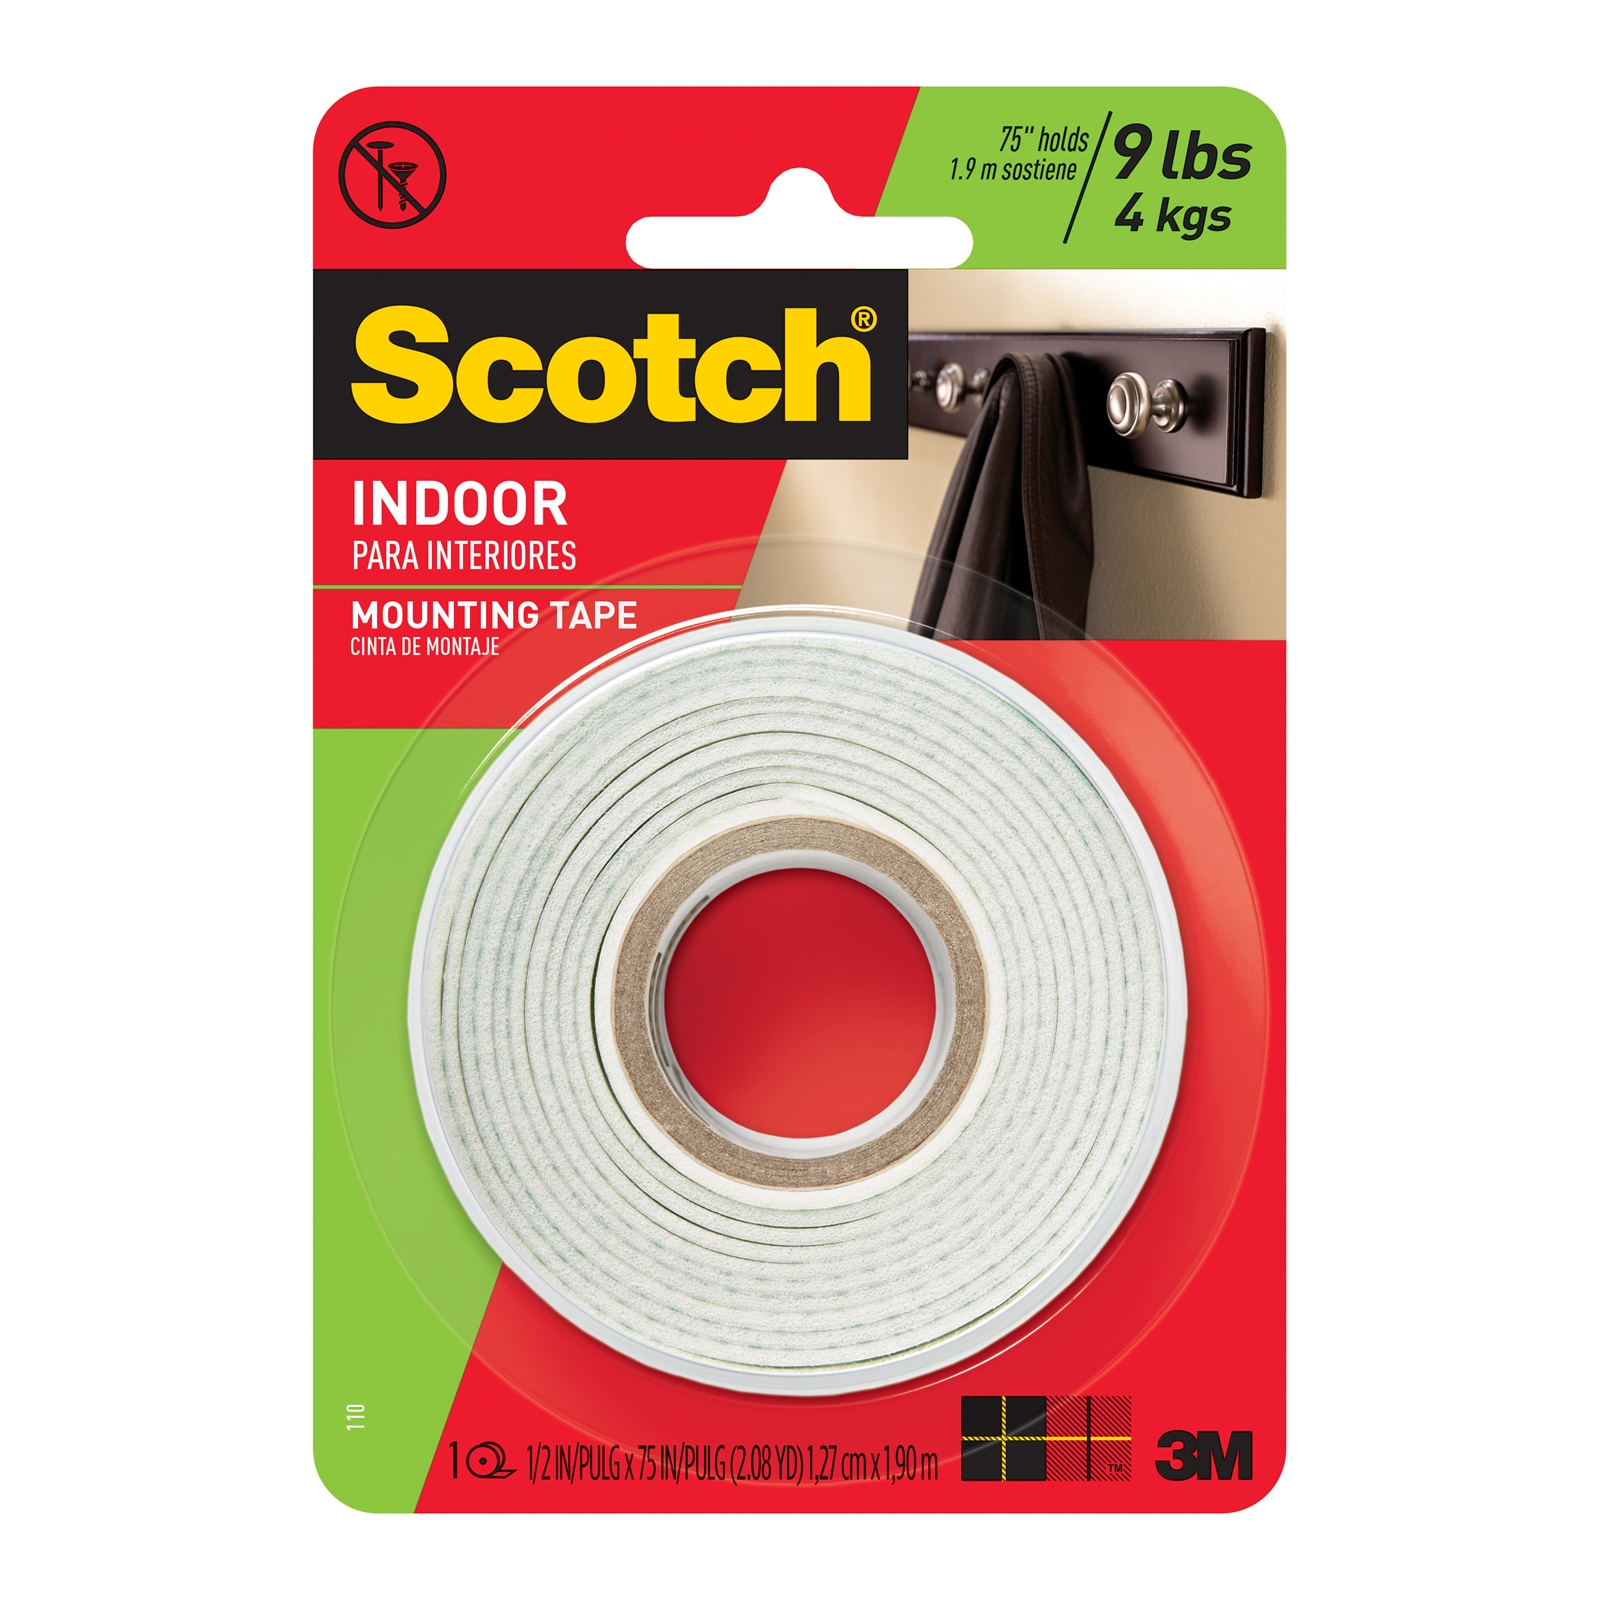 Scotch Indoor Mounting Tape Scotch 2.5cm x 1.9m